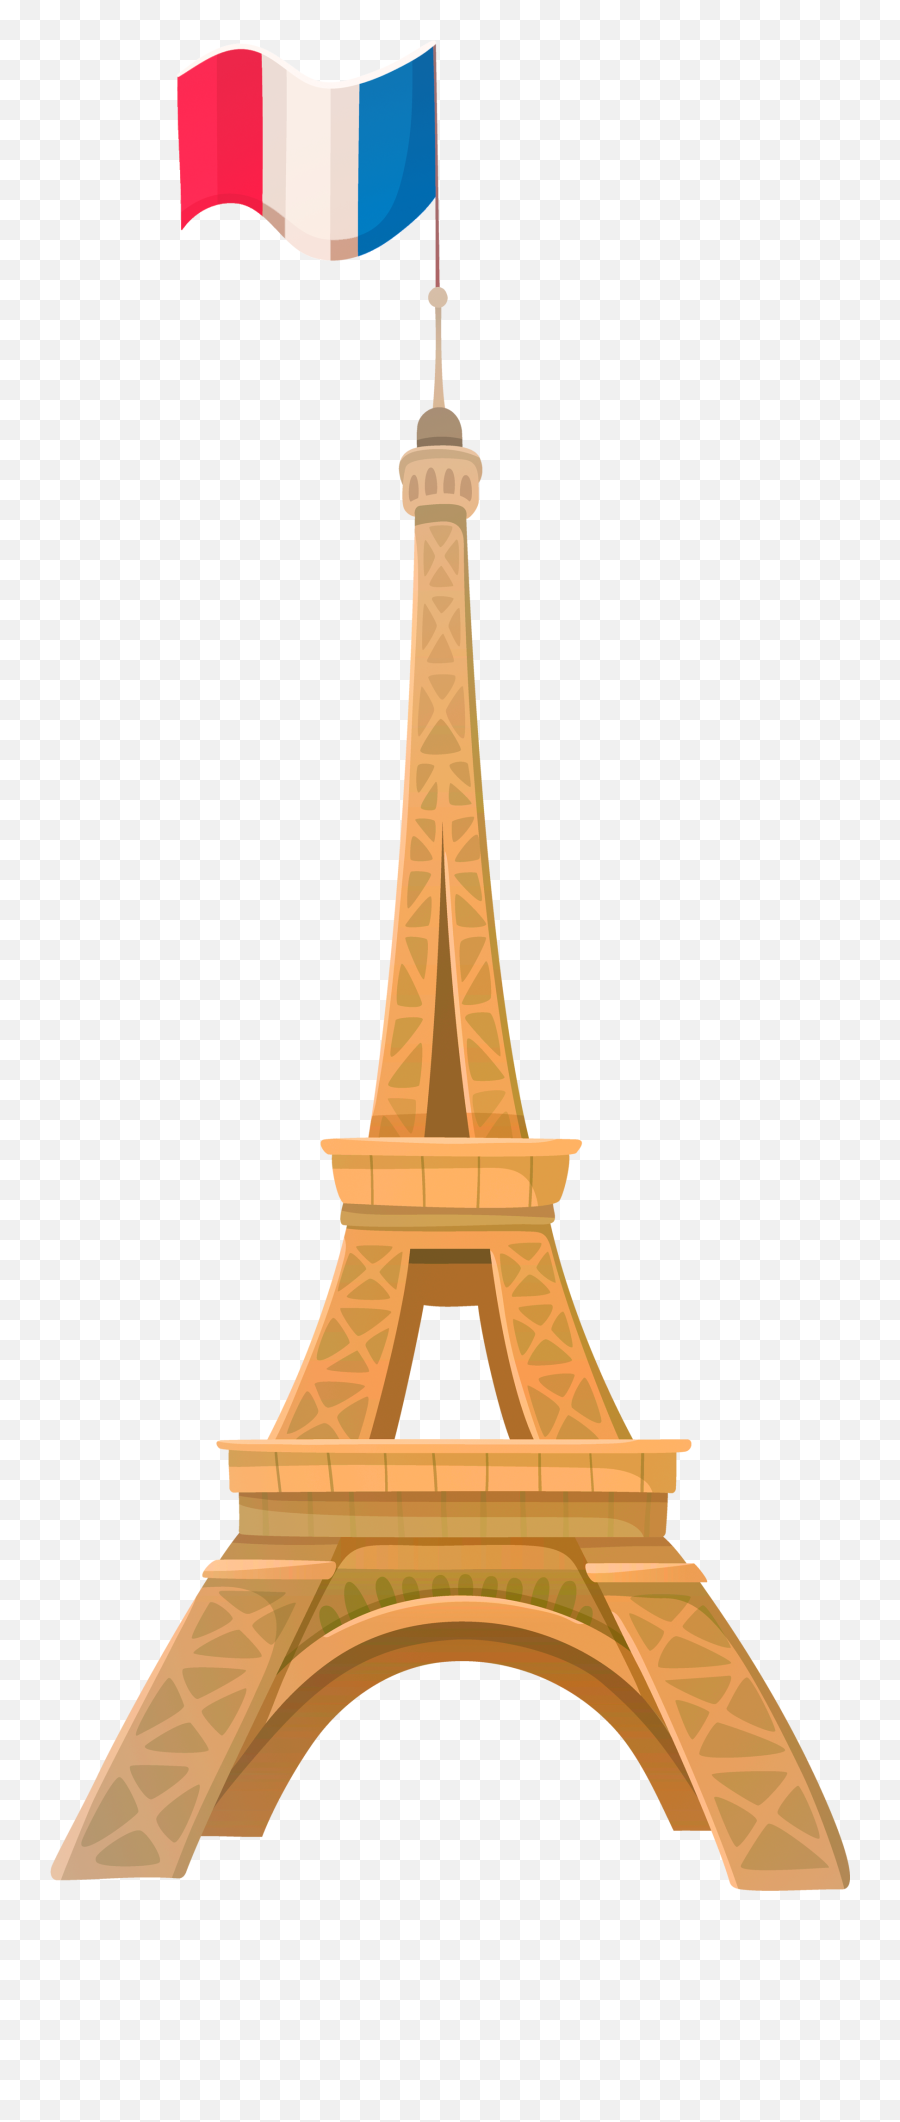 Eiffel Tower With French Flag Free Image Download Emoji,French Flag Emoji Copy